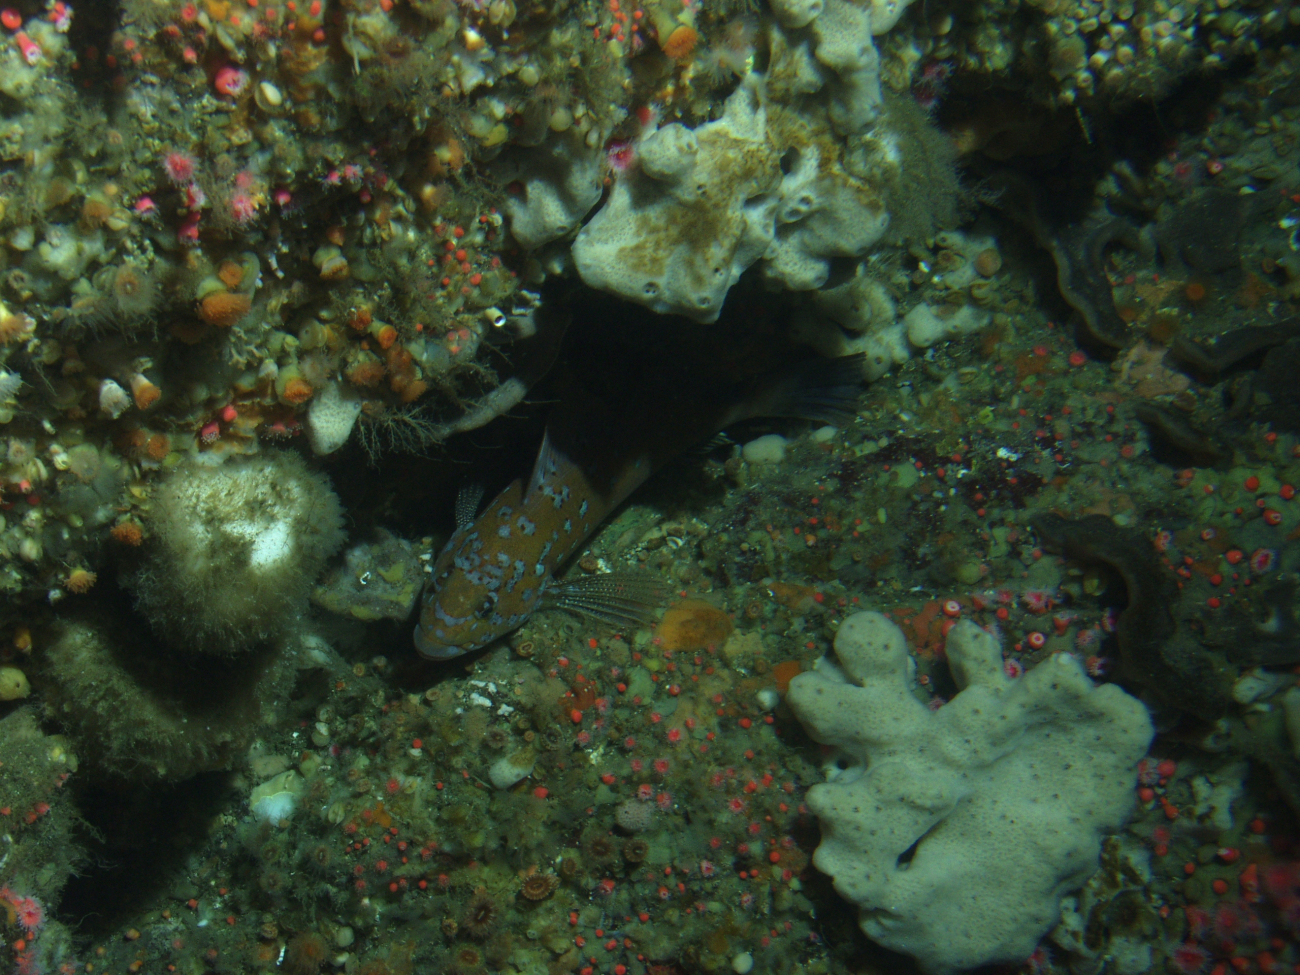 Male kelp greenling (Hexagrammos decagrammus) and foliose sponges in rockycrevice at 90 meters depth